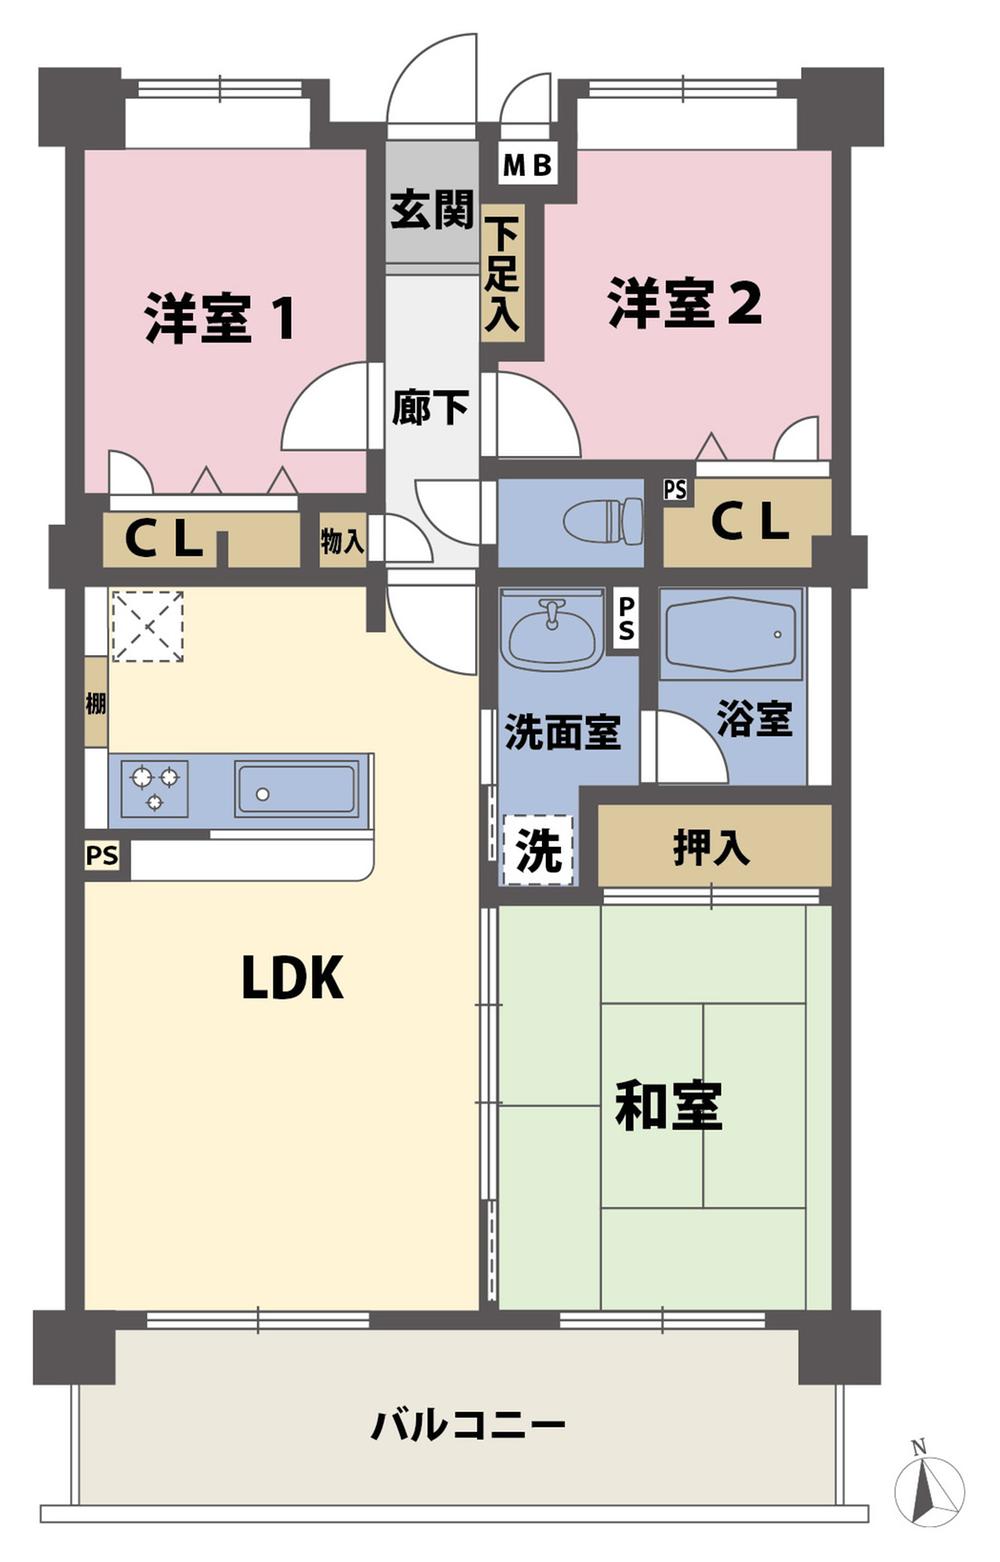 Floor plan. 3LDK, Price 14.8 million yen, Occupied area 71.05 sq m , Balcony area 12.24 sq m